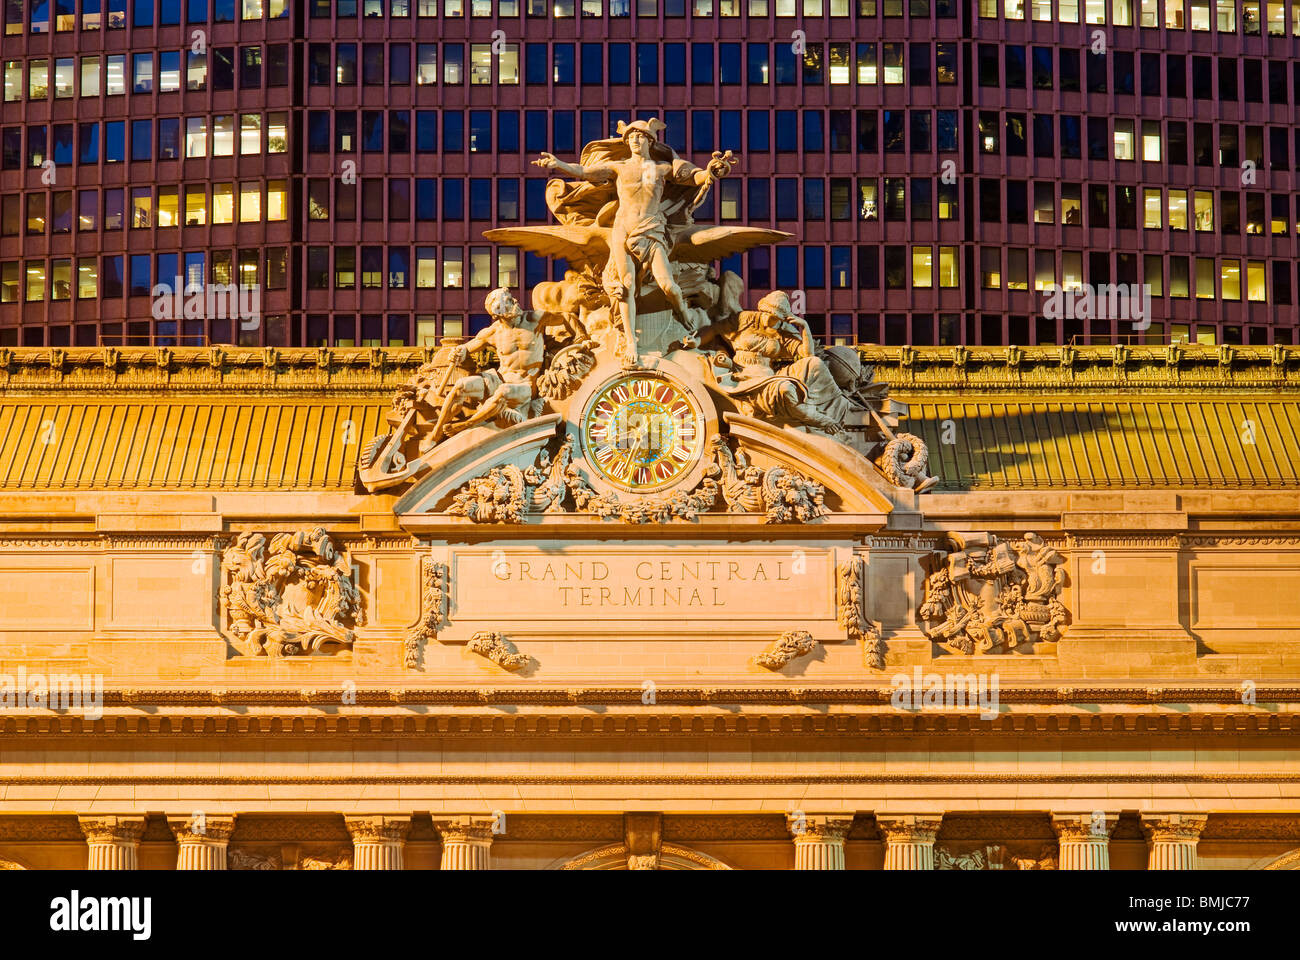 Statue of Mercury, Grand Central Terminal, New York City. Stock Photo